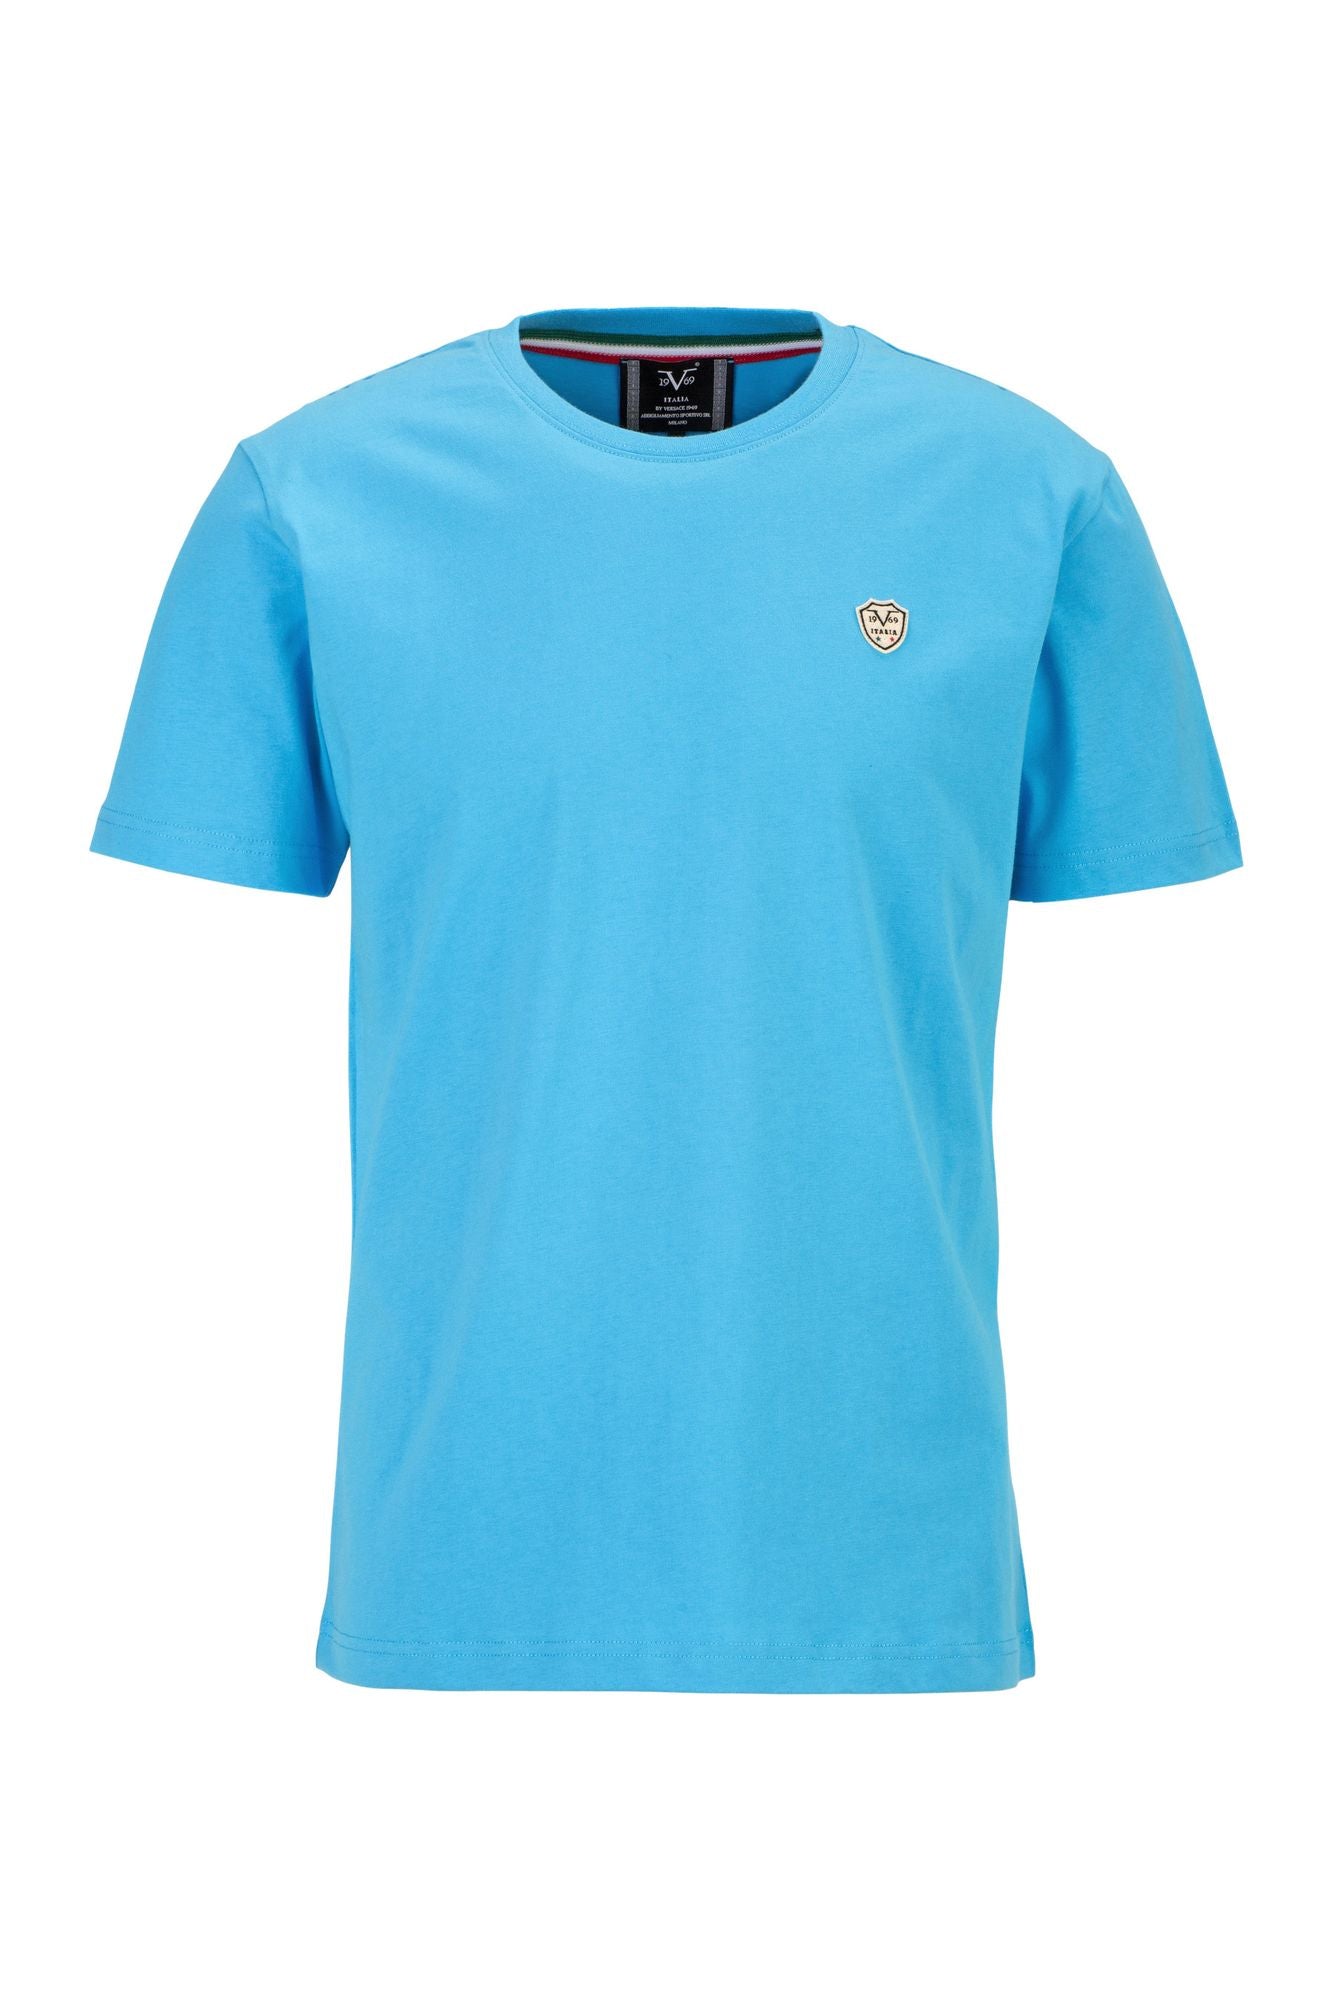 T-Shirt Rafael Bas in blau